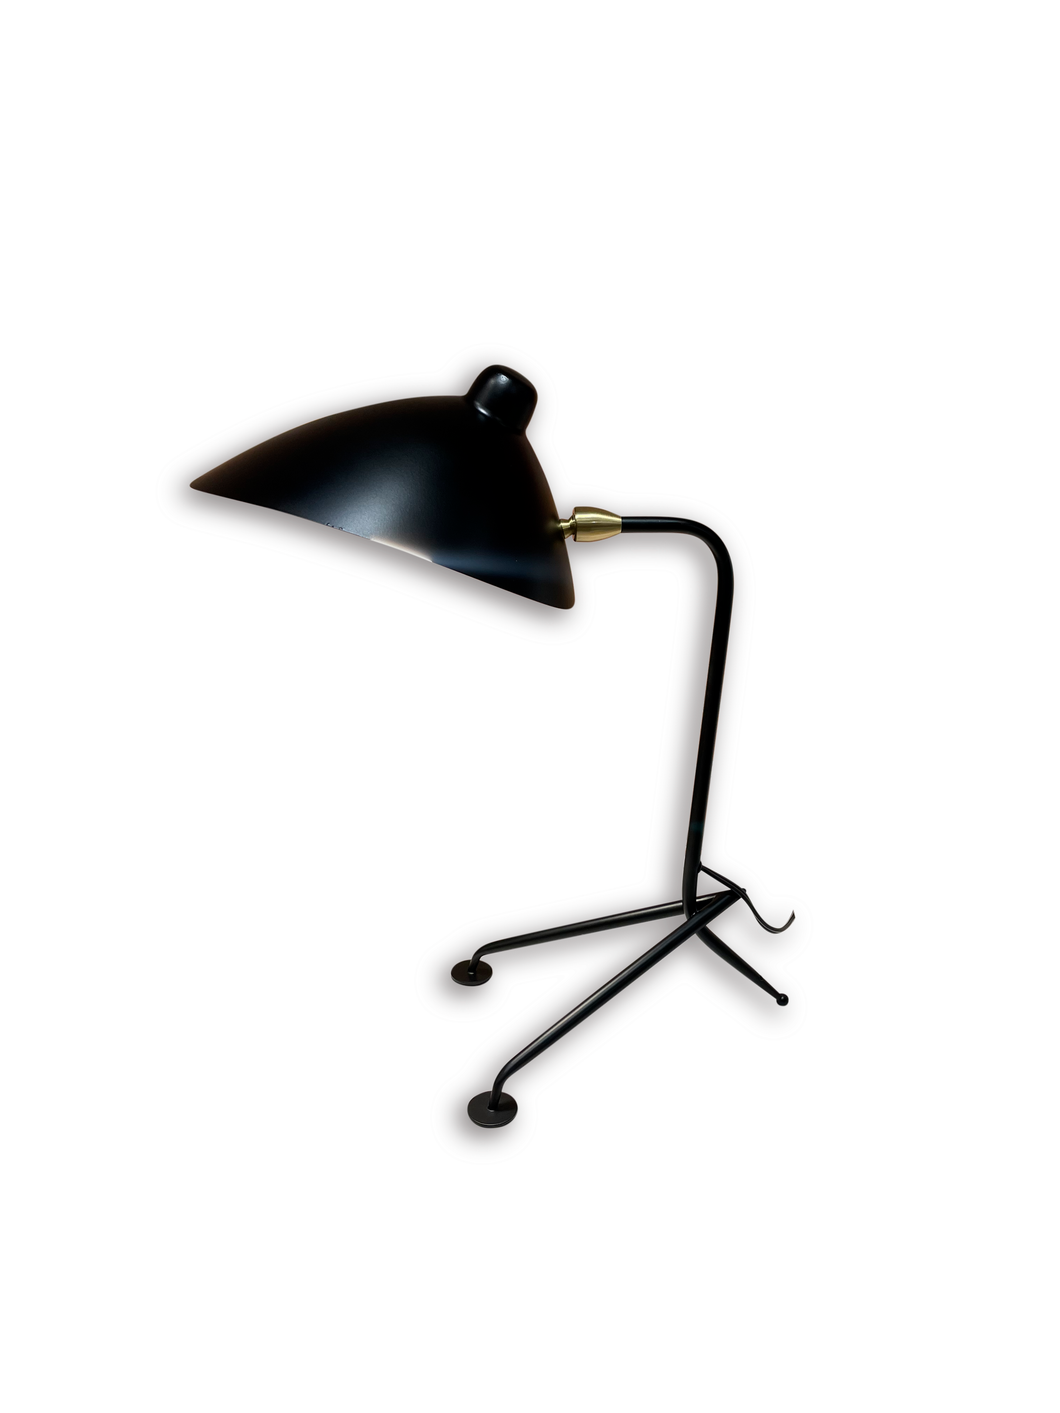 Flytrap table lamp